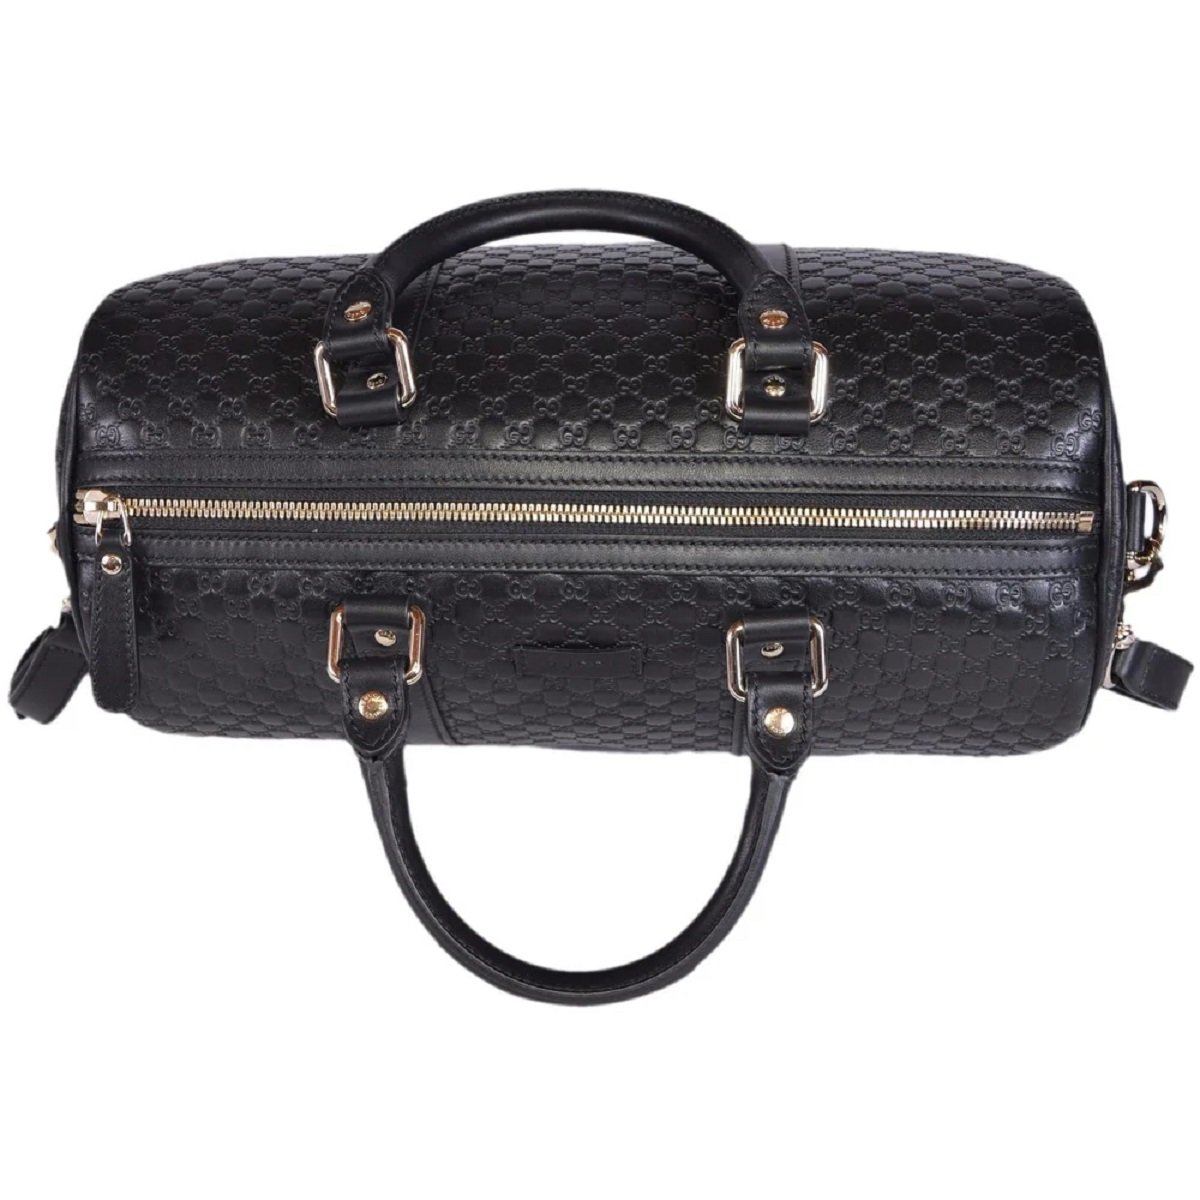 Gucci Microguccissima GG Black Leather Embossed Boston Bag - LUXURYMRKT